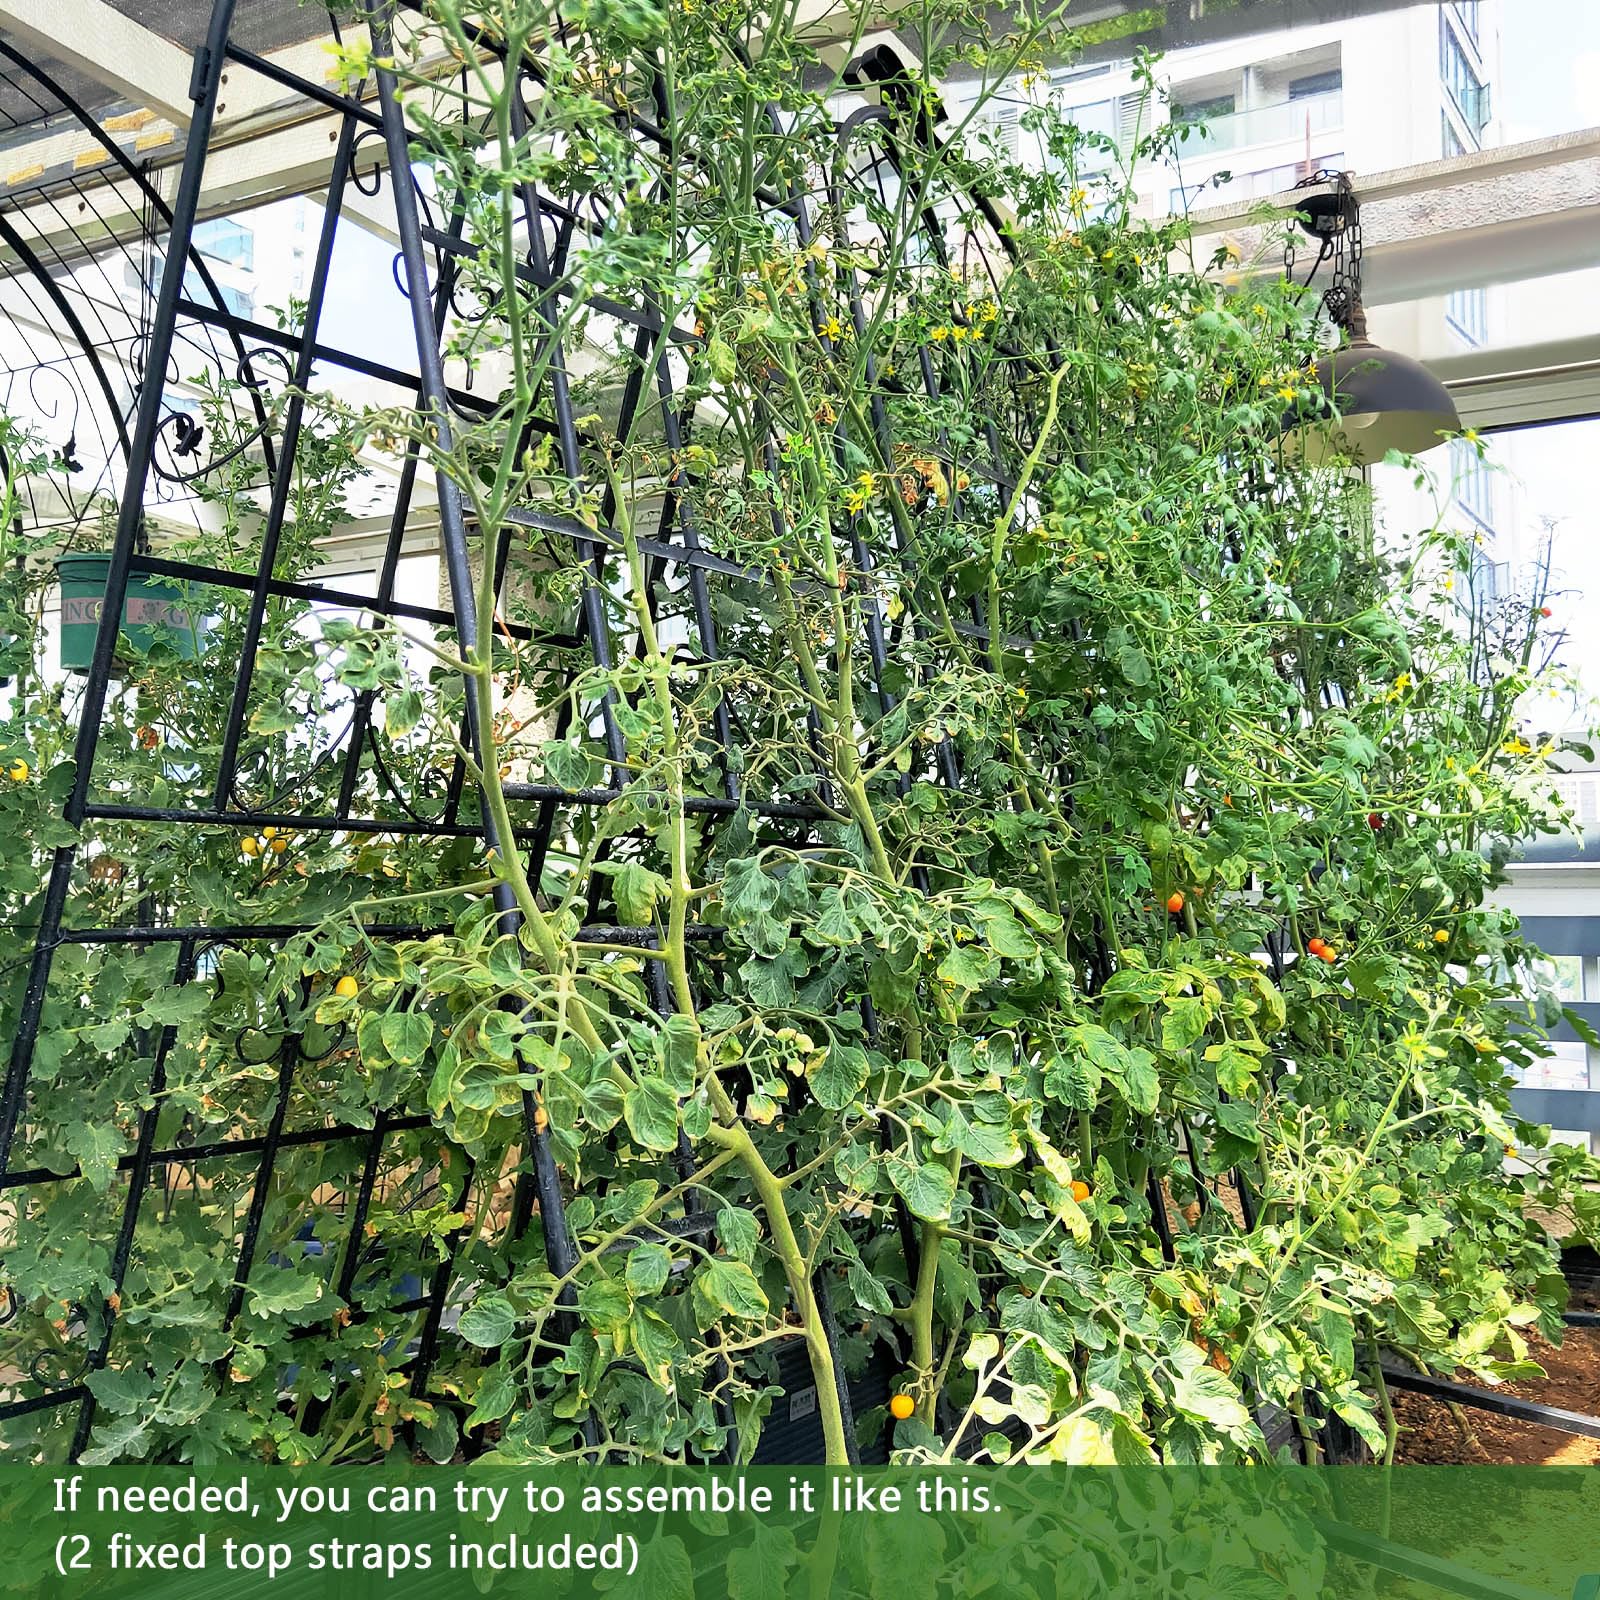 Giantex Trellis for Climbing Plants Outdoor, 6 FT Tall Galvanized Steel Garden Trellis